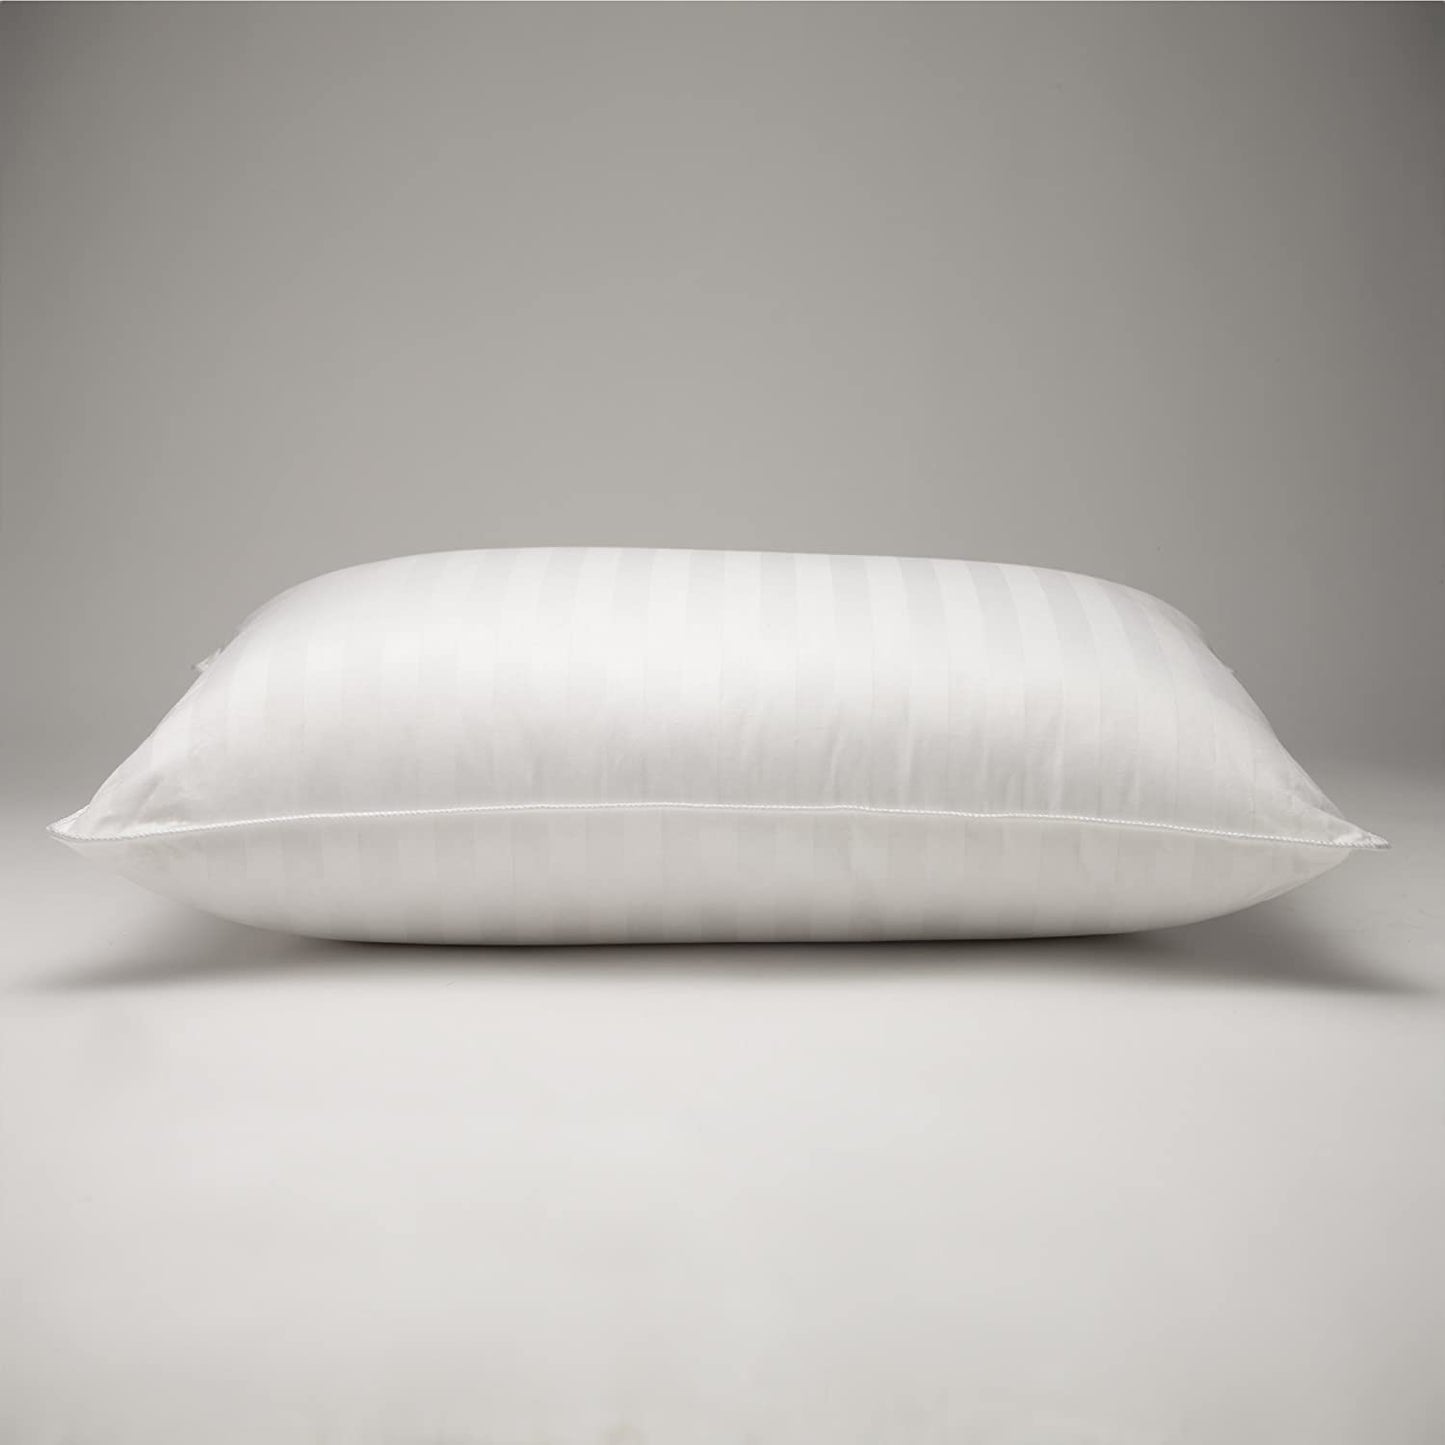 European White Goose Down Pillow for Sleeping - 800 Fill Power